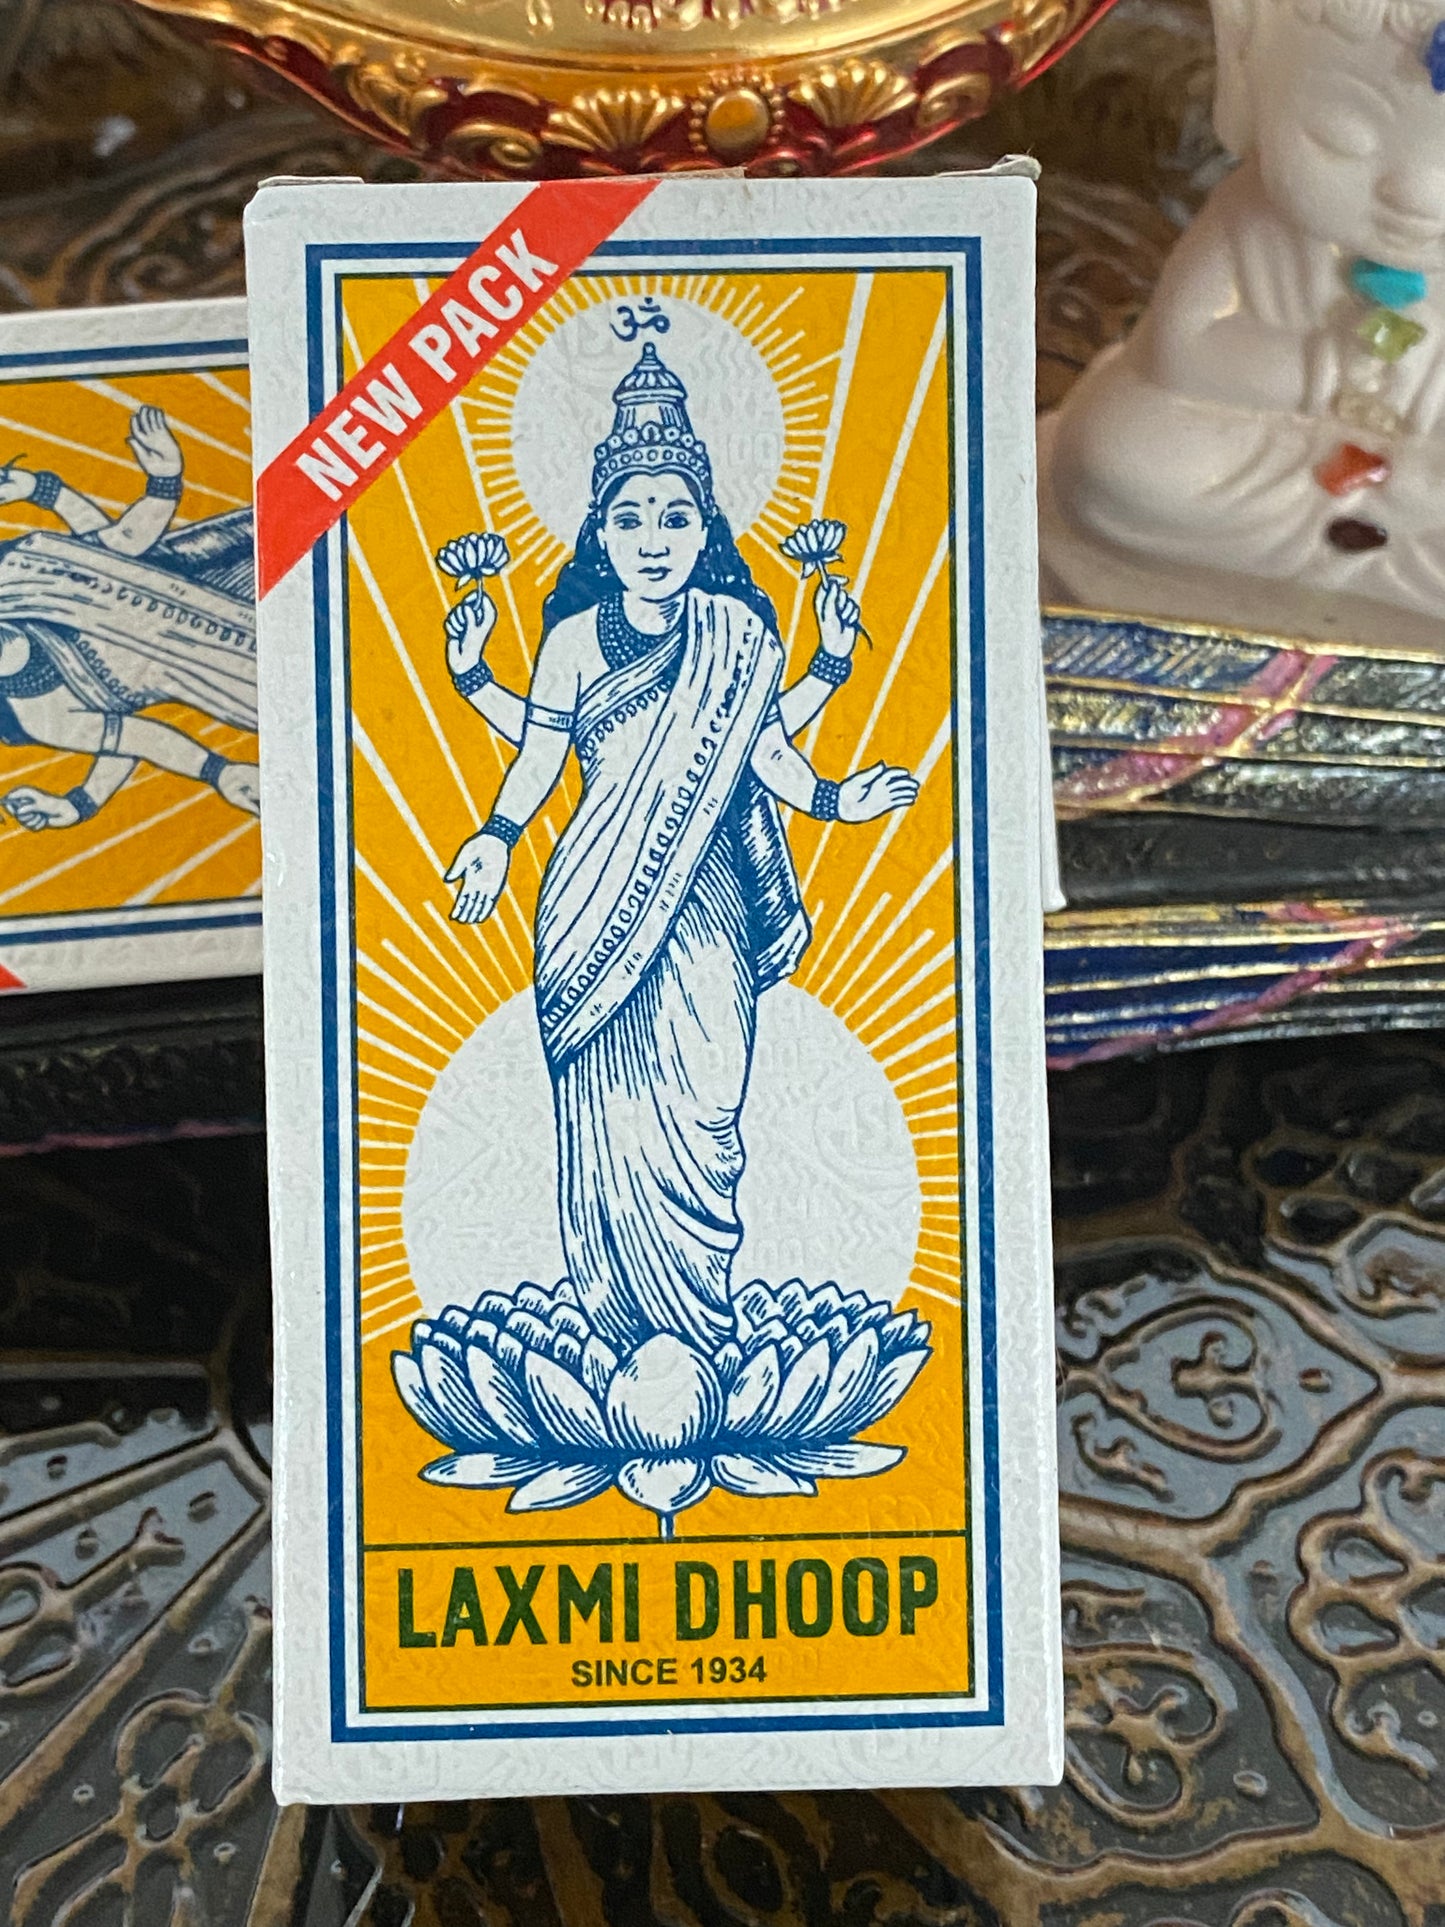 Laxmi Dhoop Sticks